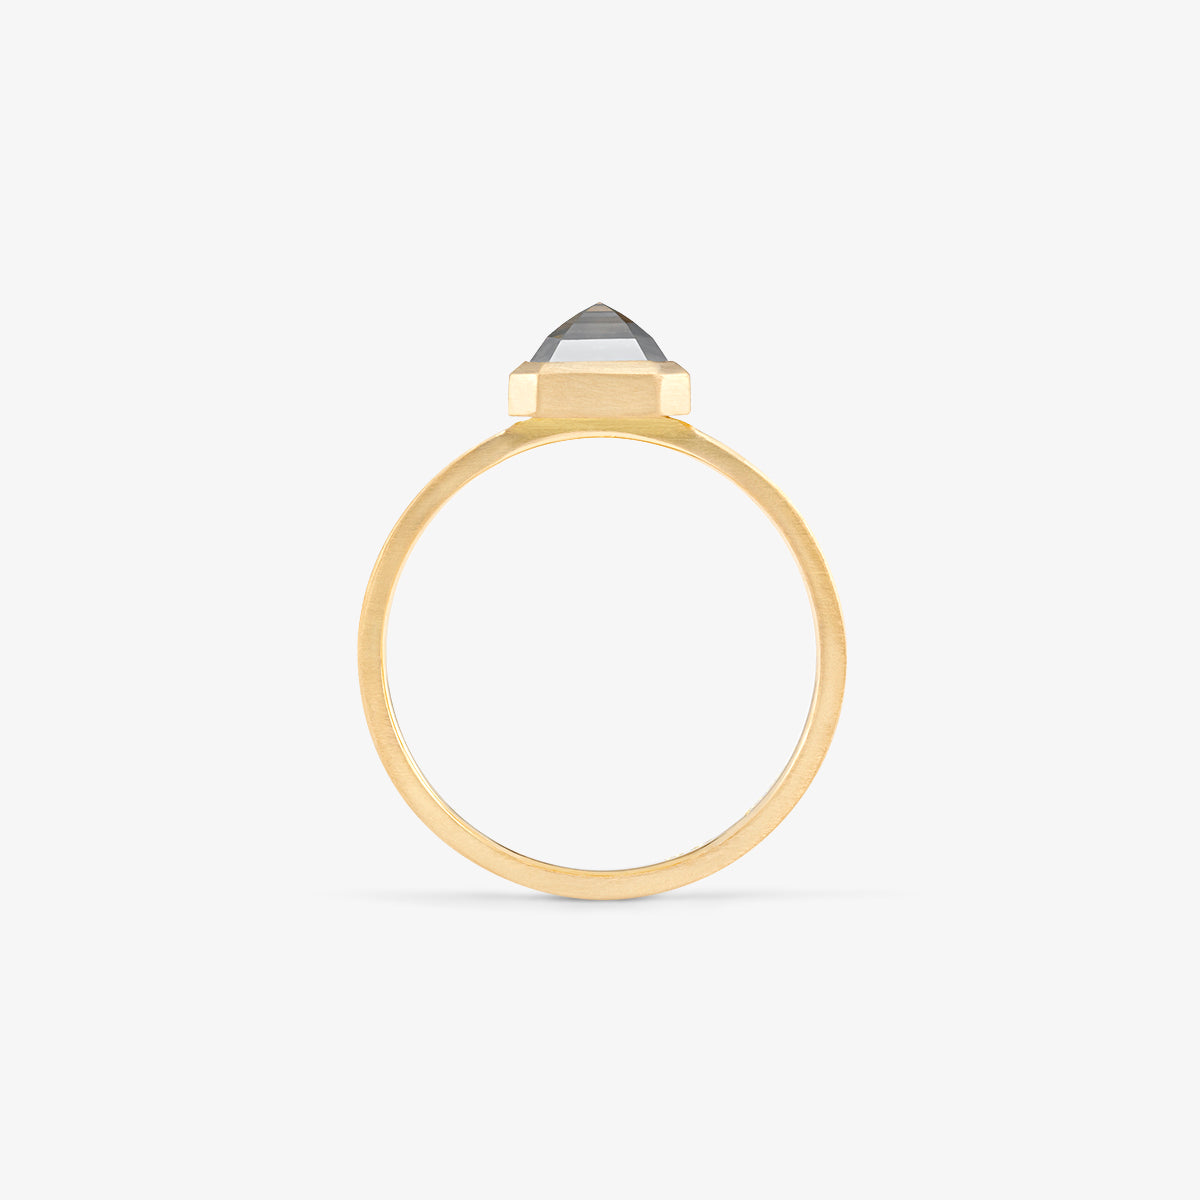 1.17 Carat One-of-a-Kind Mogul Cut Diamond Ring